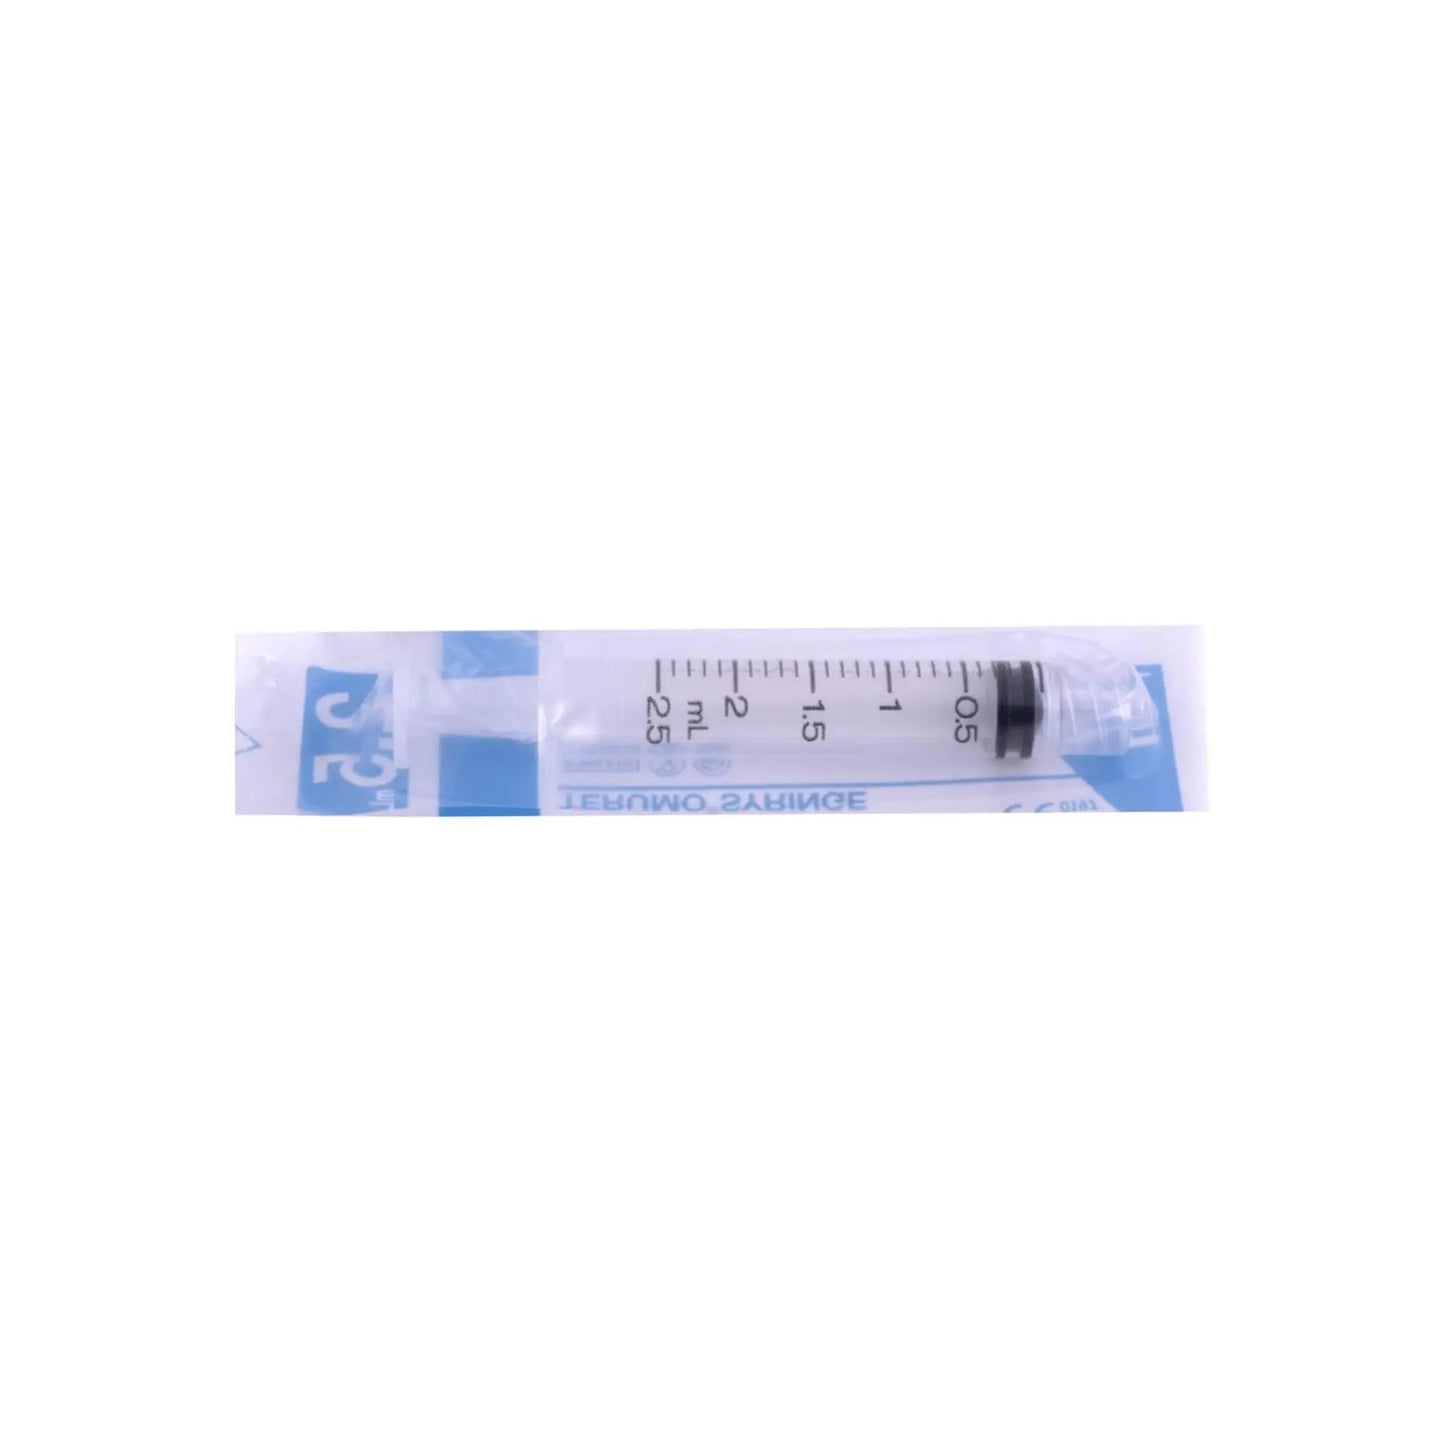 Terumo 2.5ml Disposable 100 Syringes - Arc Health Nutrition UK Ltd 